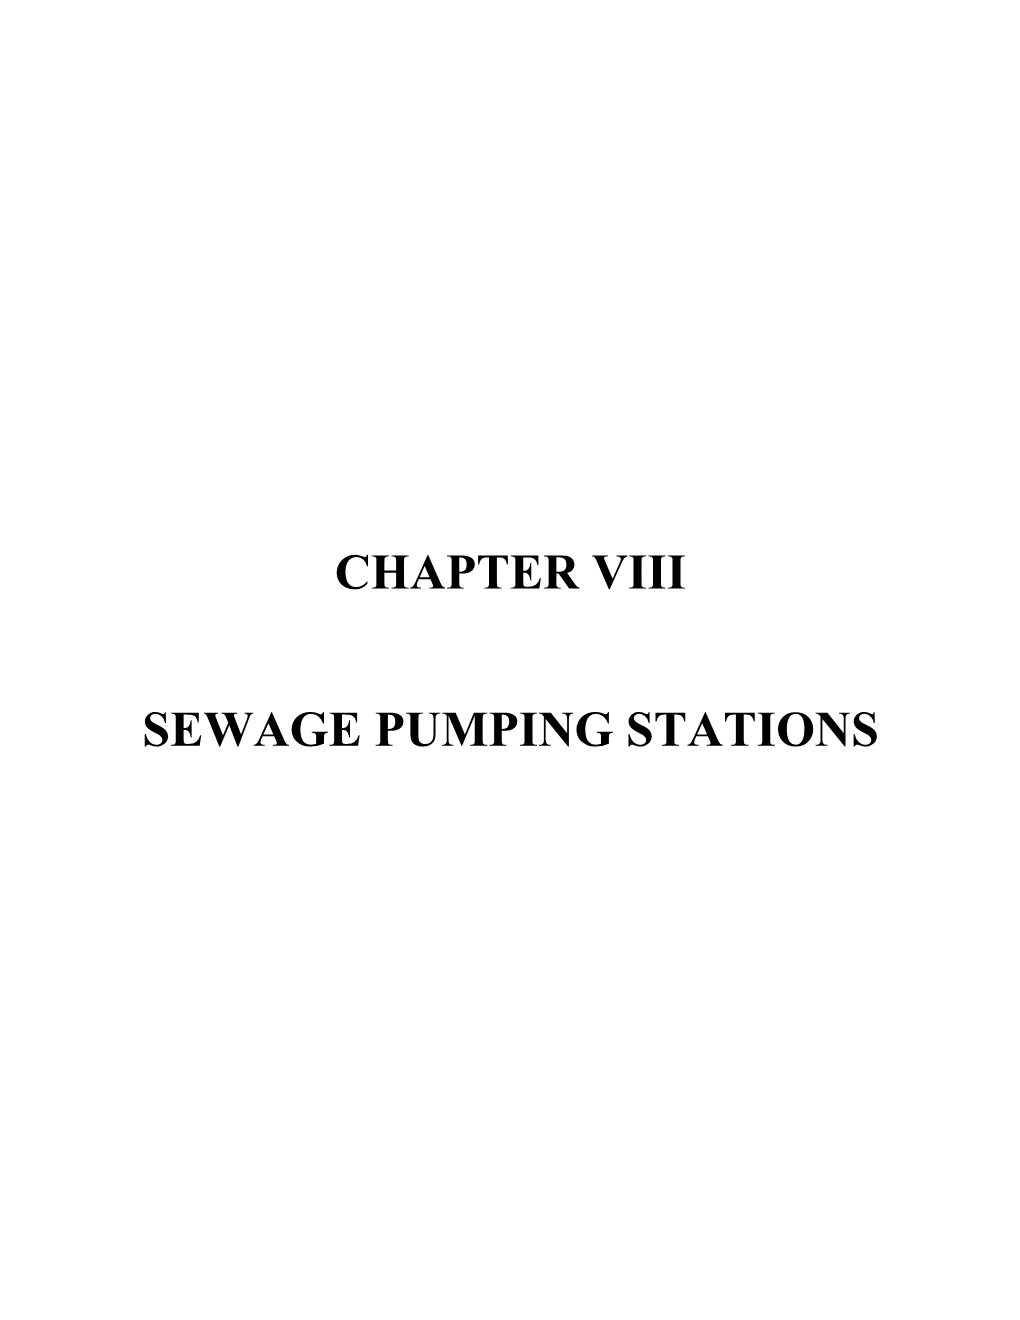 Sewage Pumping Stations